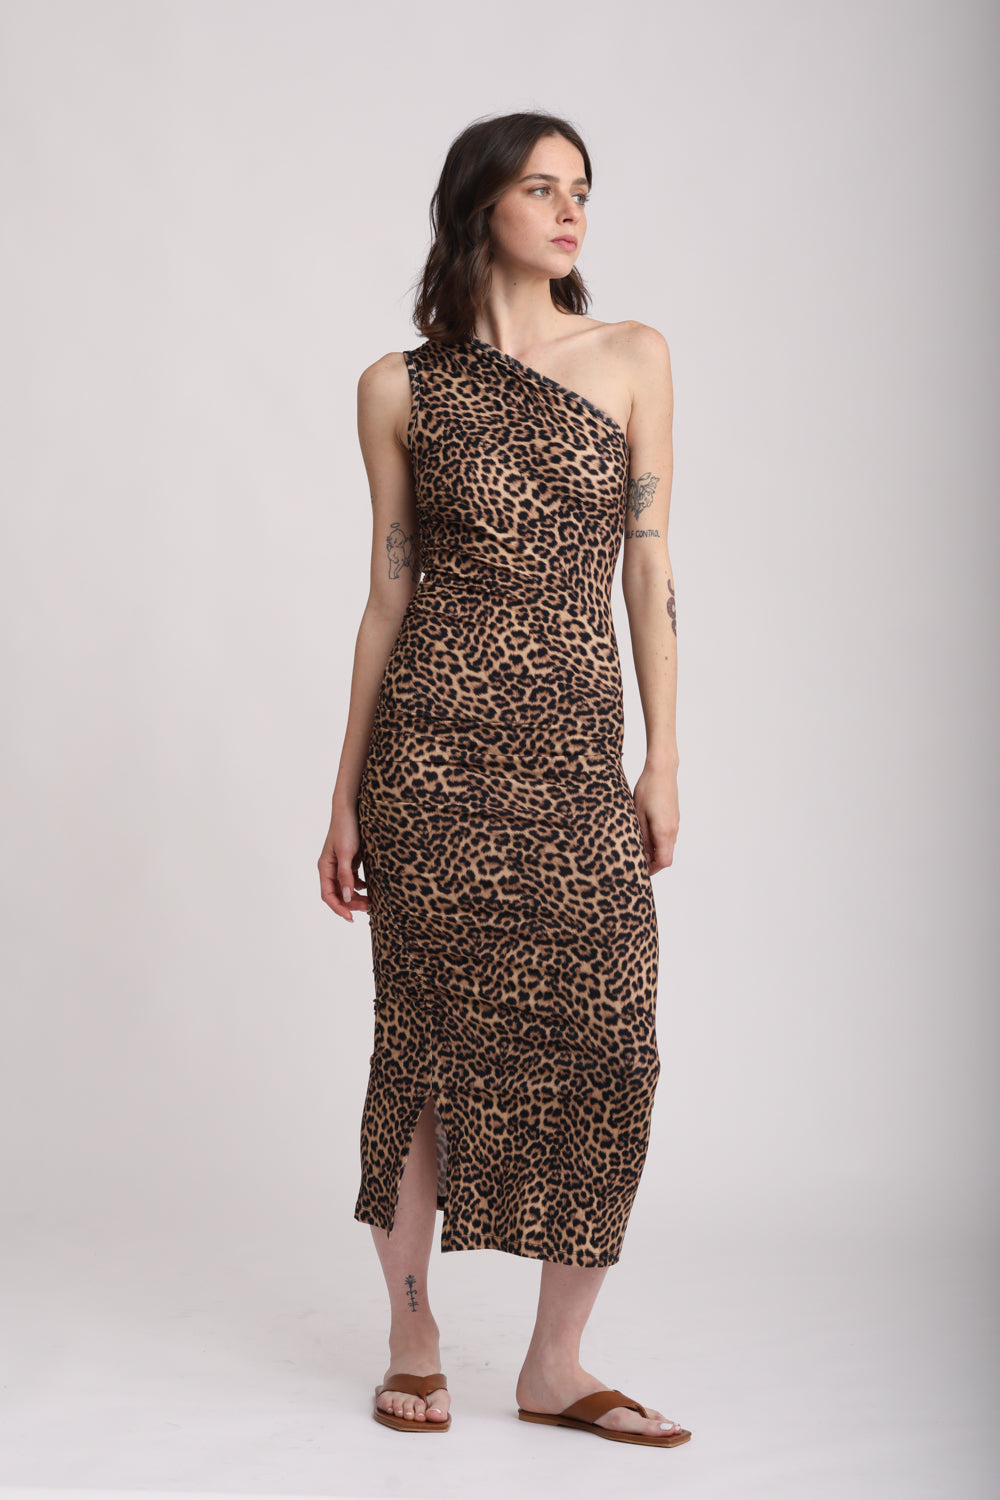 Have Leopard Dress